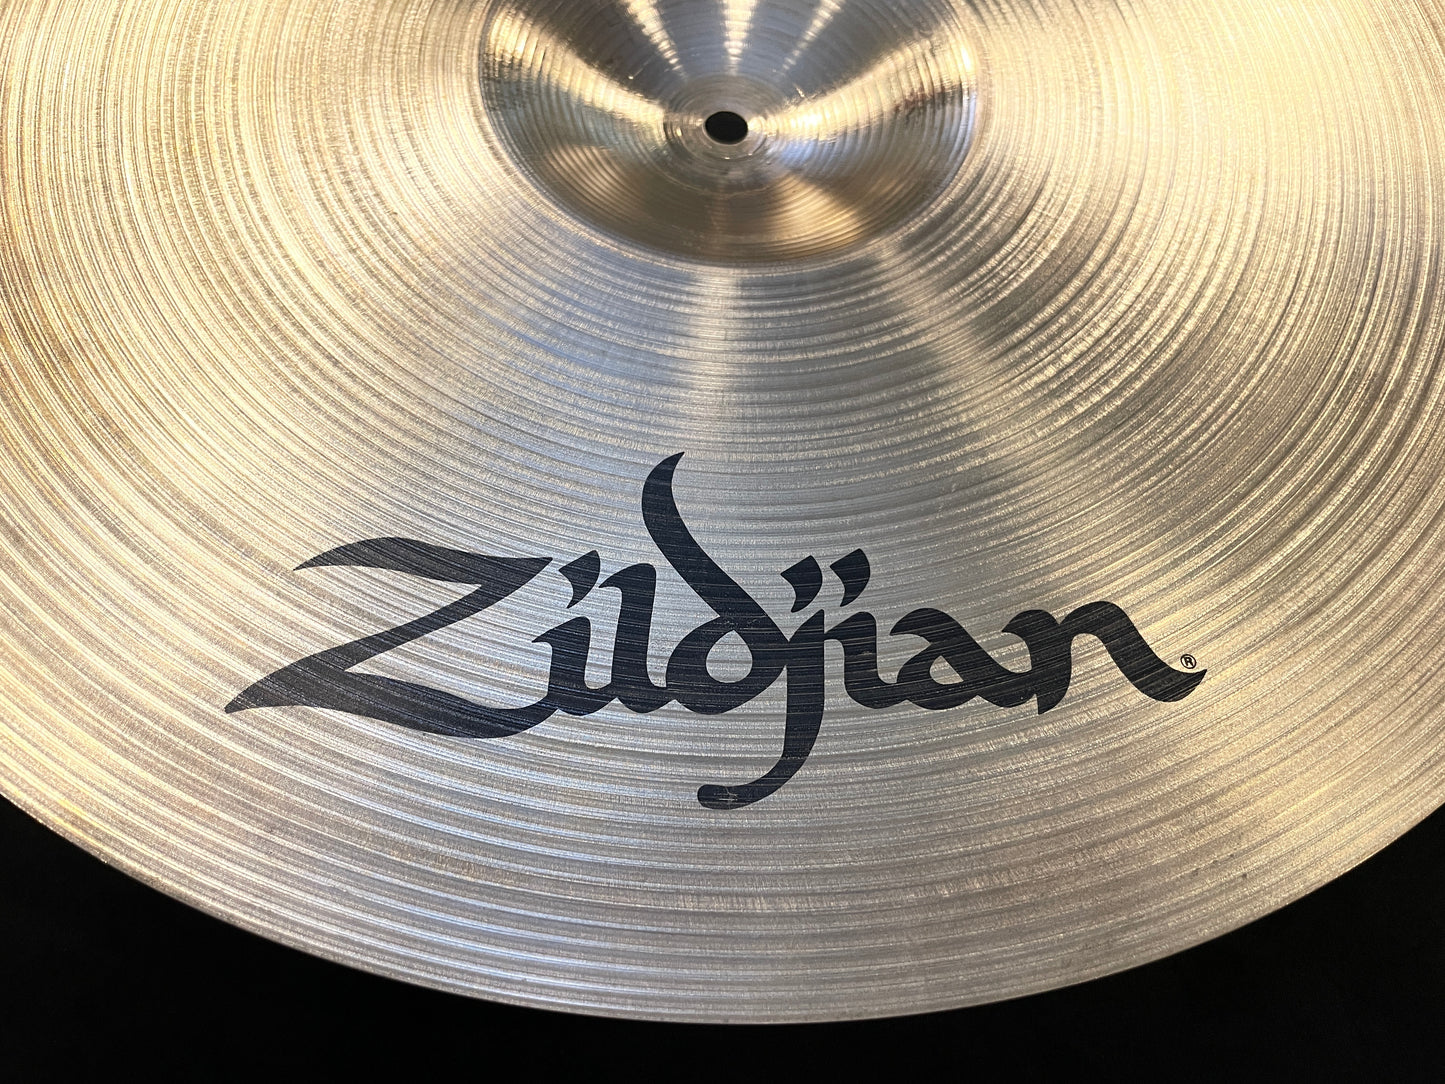 19" Zildjian A Medium Thin Crash Cymbal 1806g